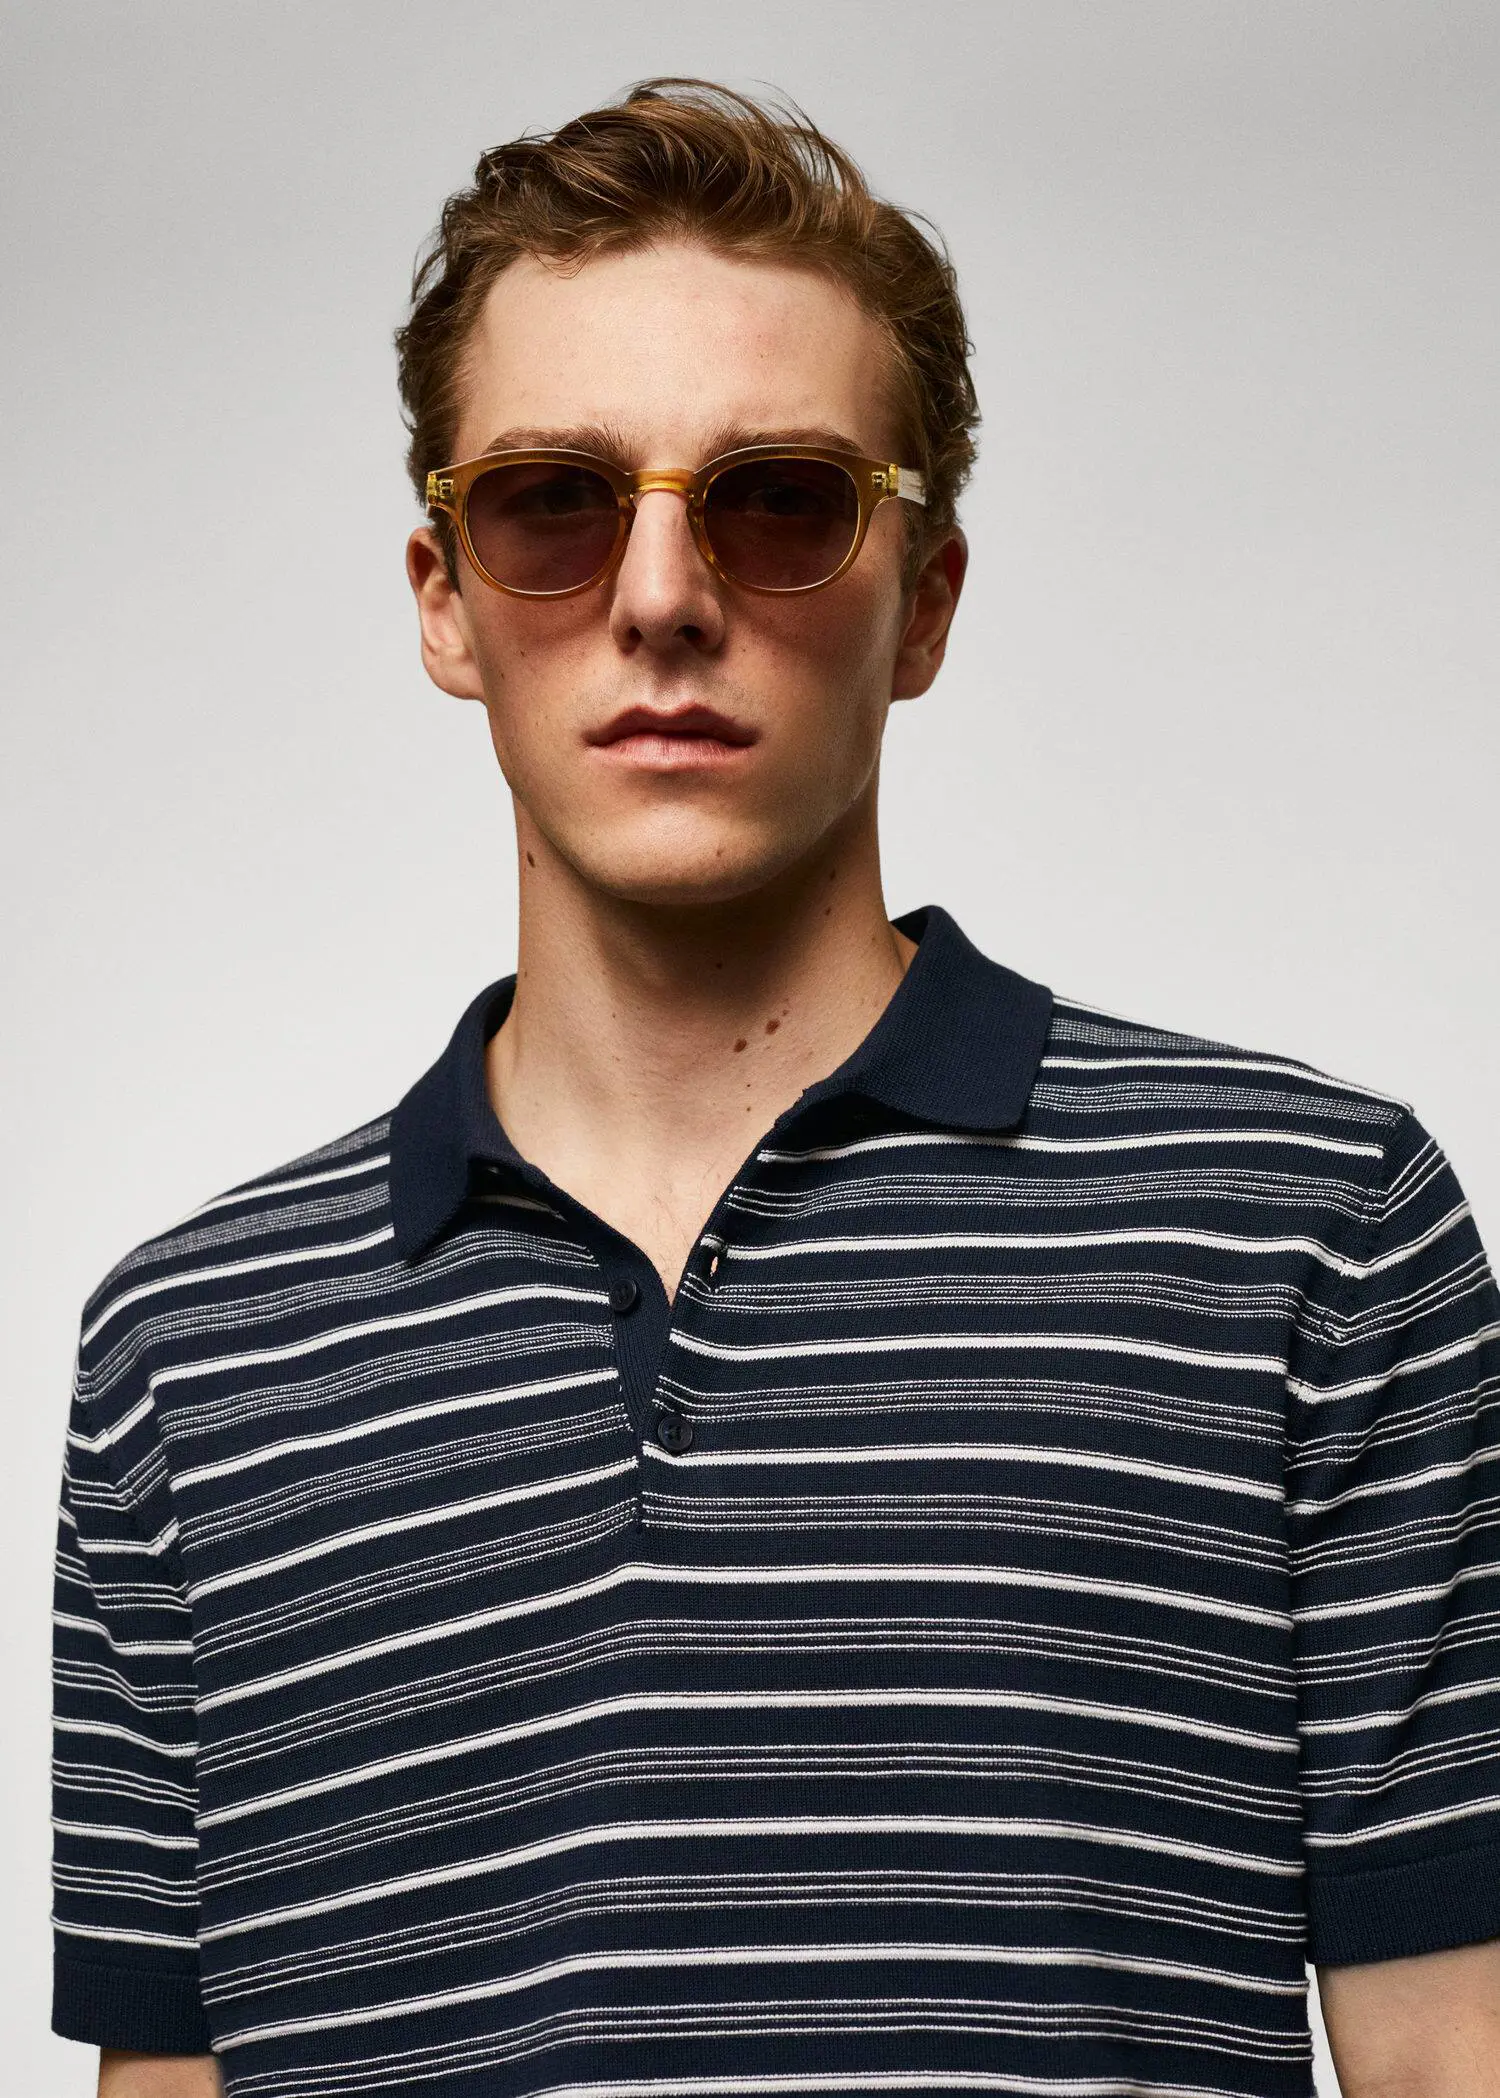 Mango Striped fine-knit polo shirt. a young man wearing sunglasses and a striped shirt. 